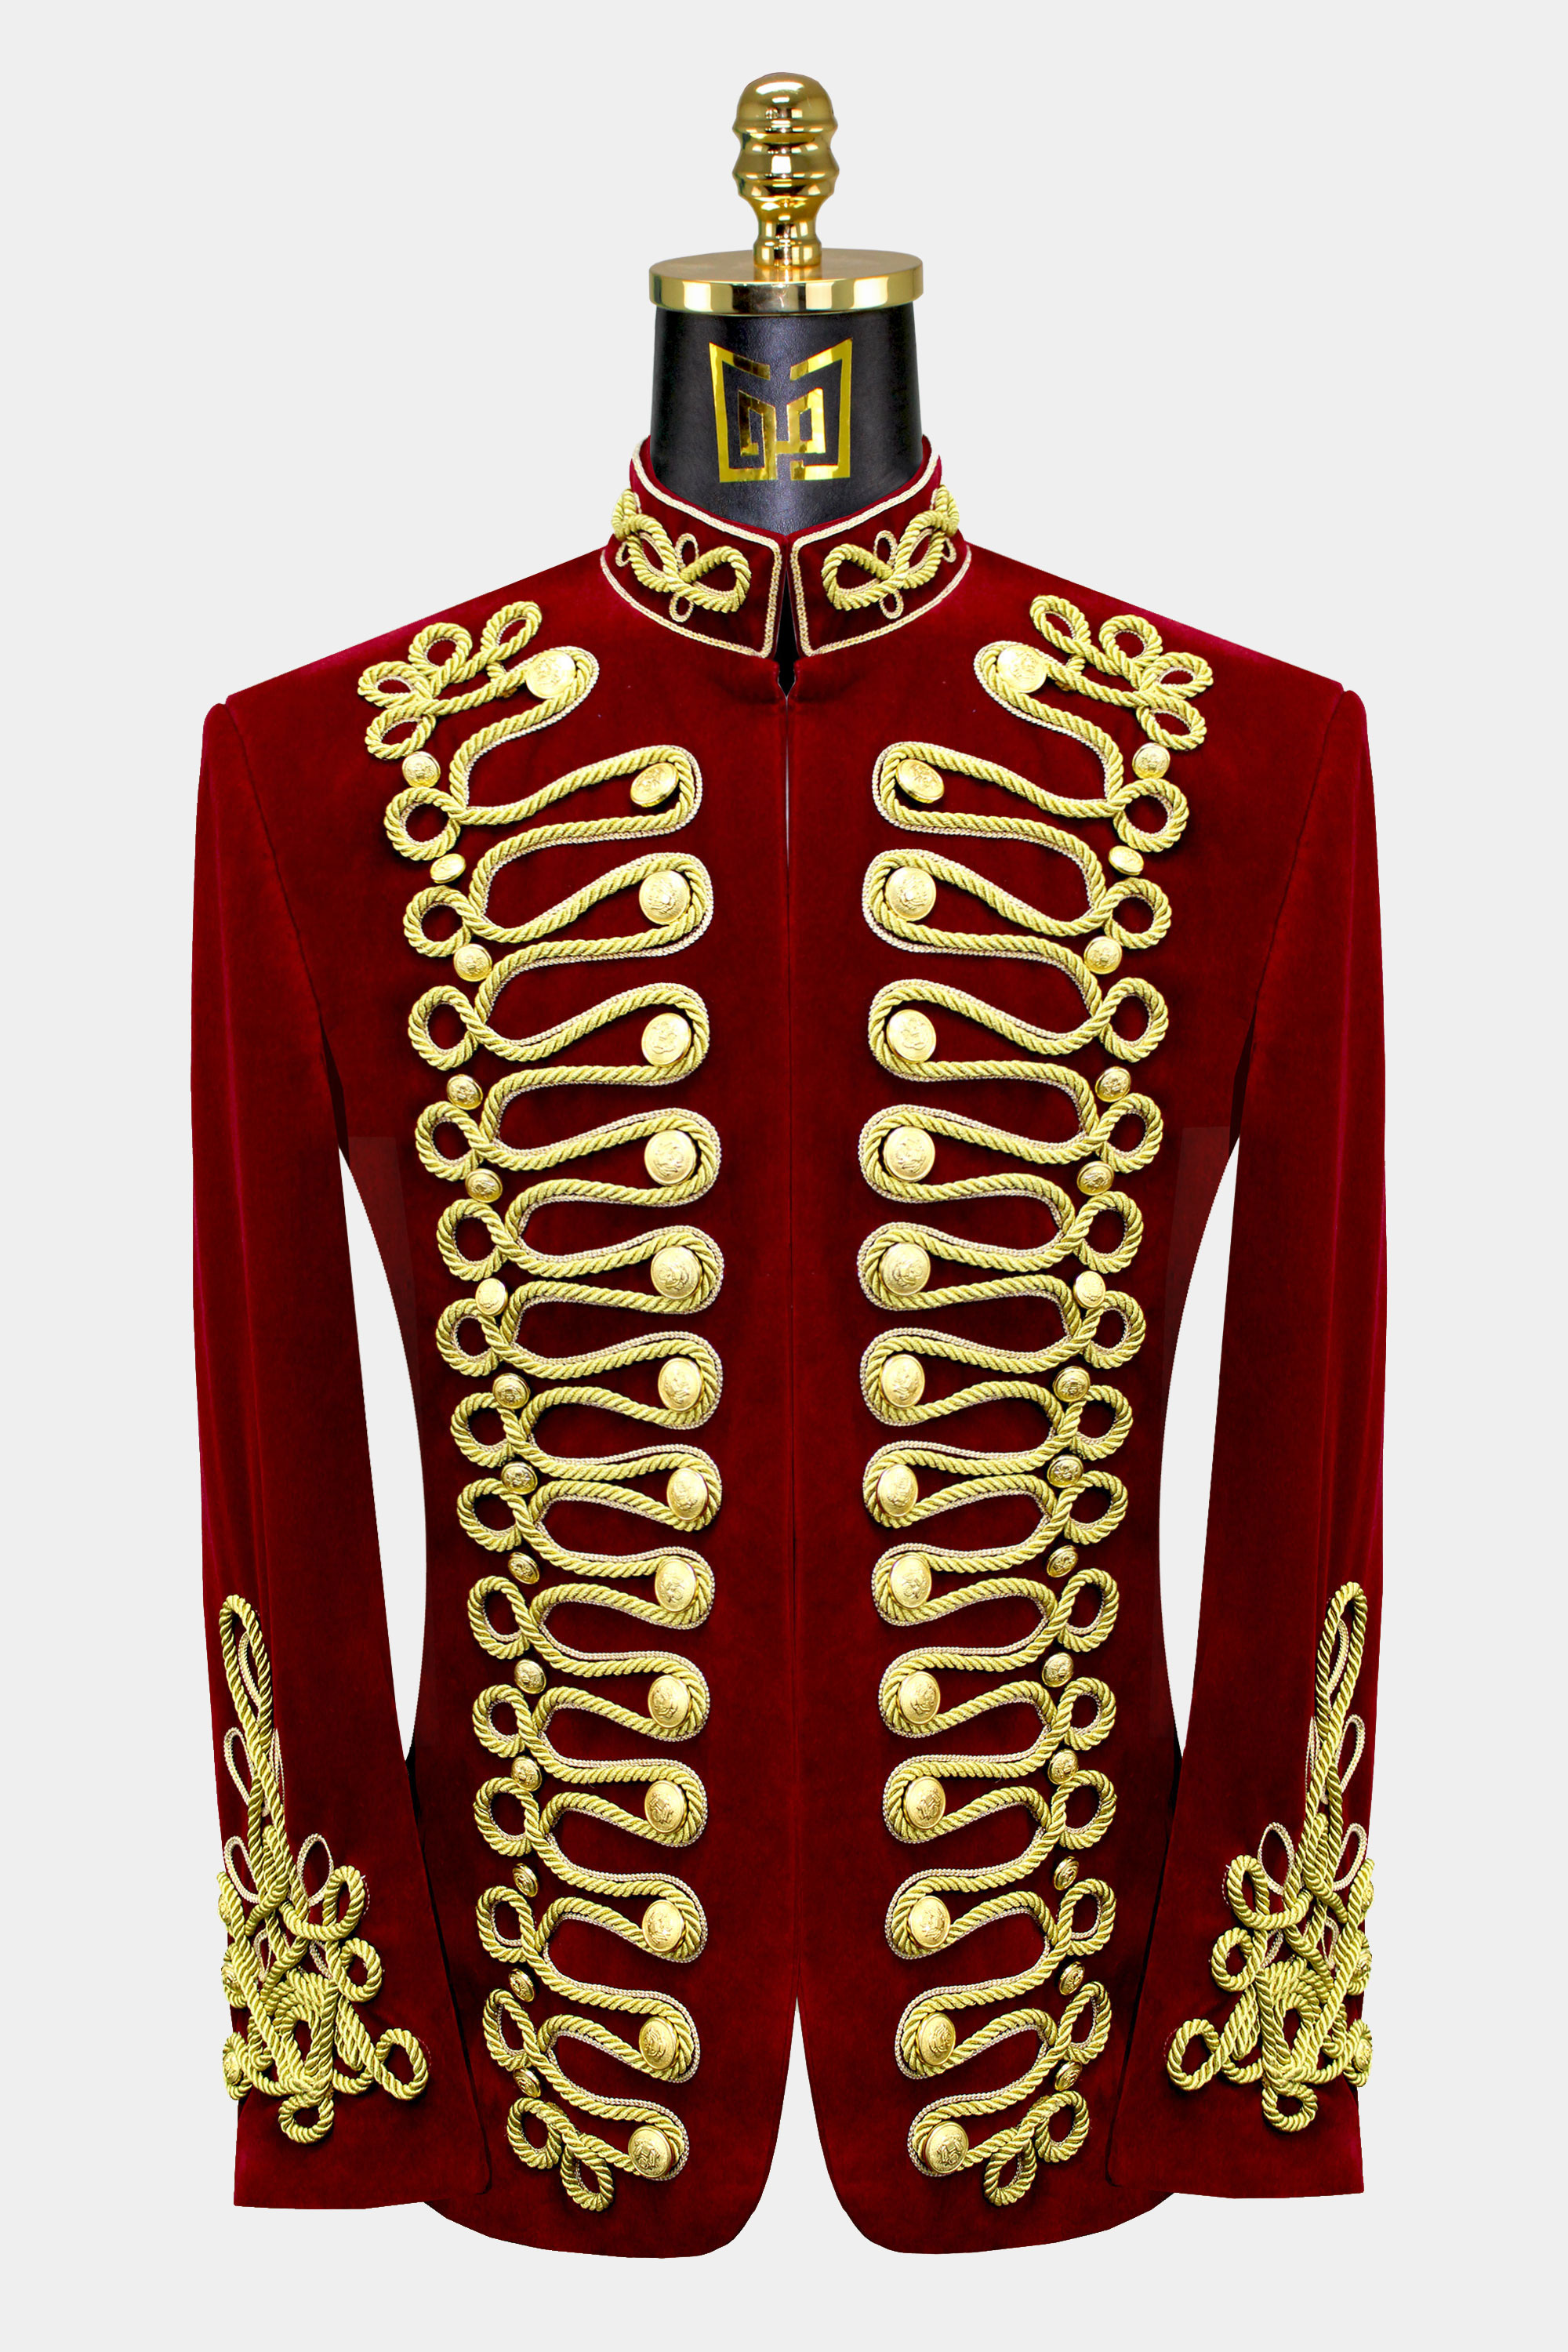 Mens-Red-and-Gold-Mandarin-Collar-Jacket-Prom-Blazer-Wedding-Groom-Suit-from-Gentlemansguru.com